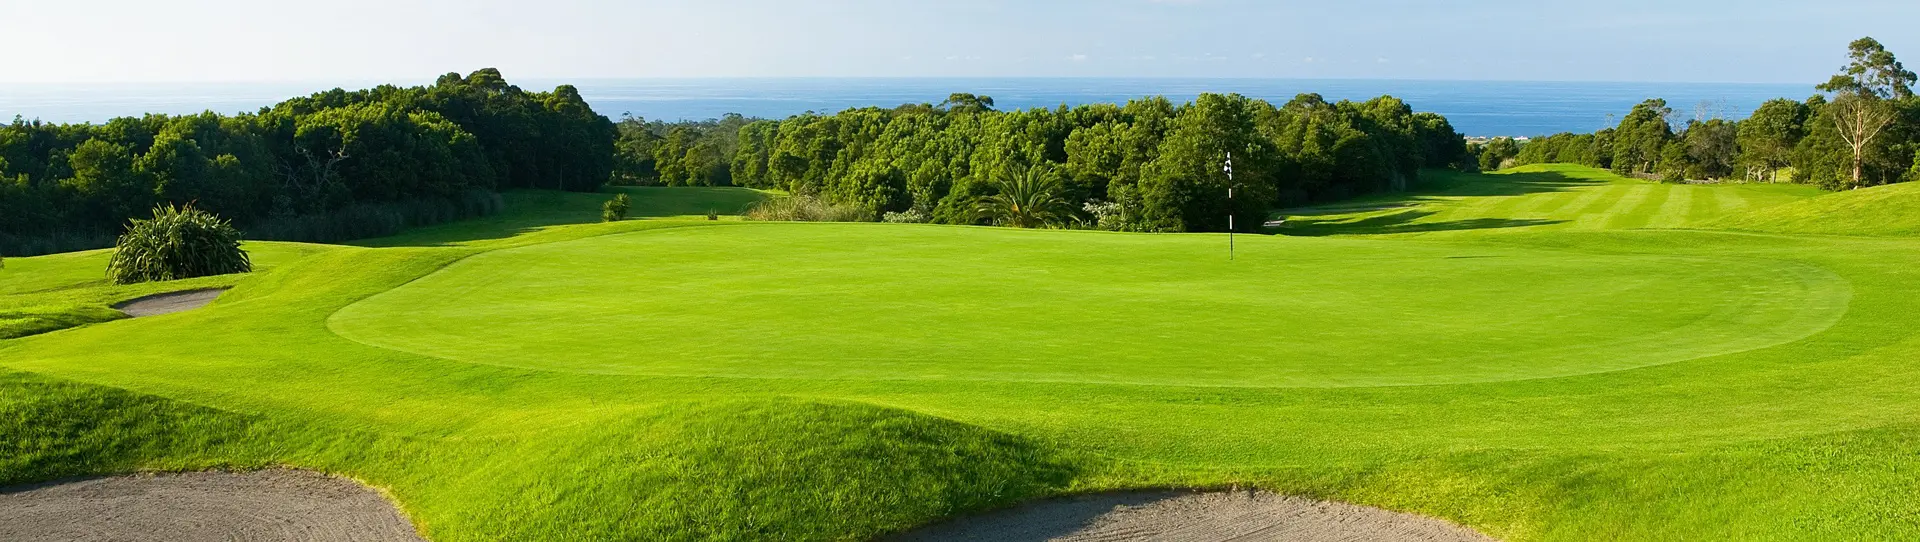 Portugal golf courses - Batalha Golf Club - Photo 2